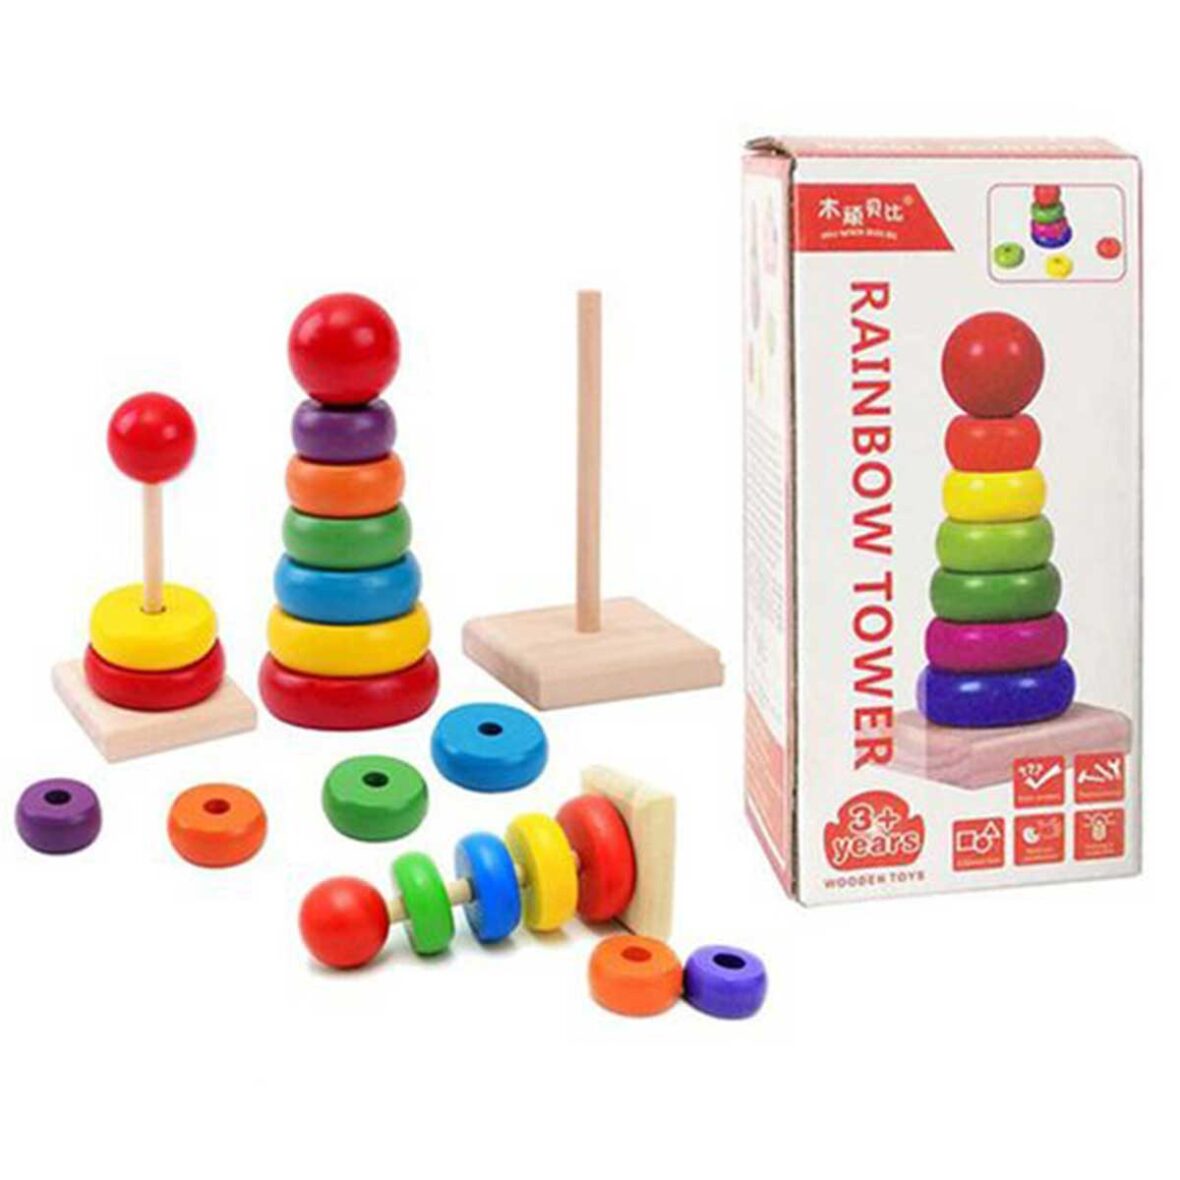 Wooden Toys Rainbow Tower